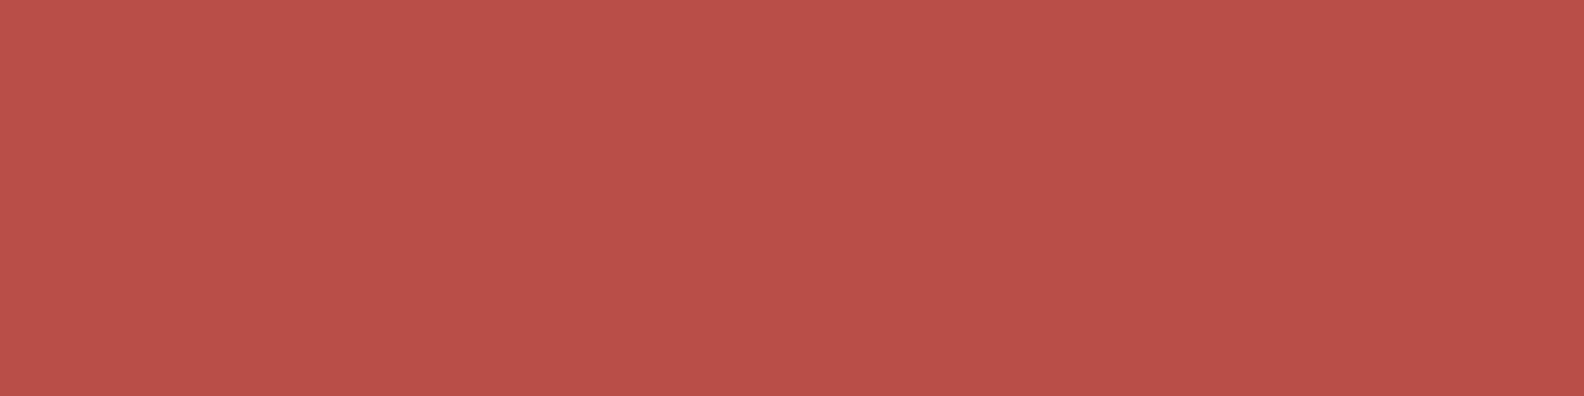 1584x396 Deep Chestnut Solid Color Background